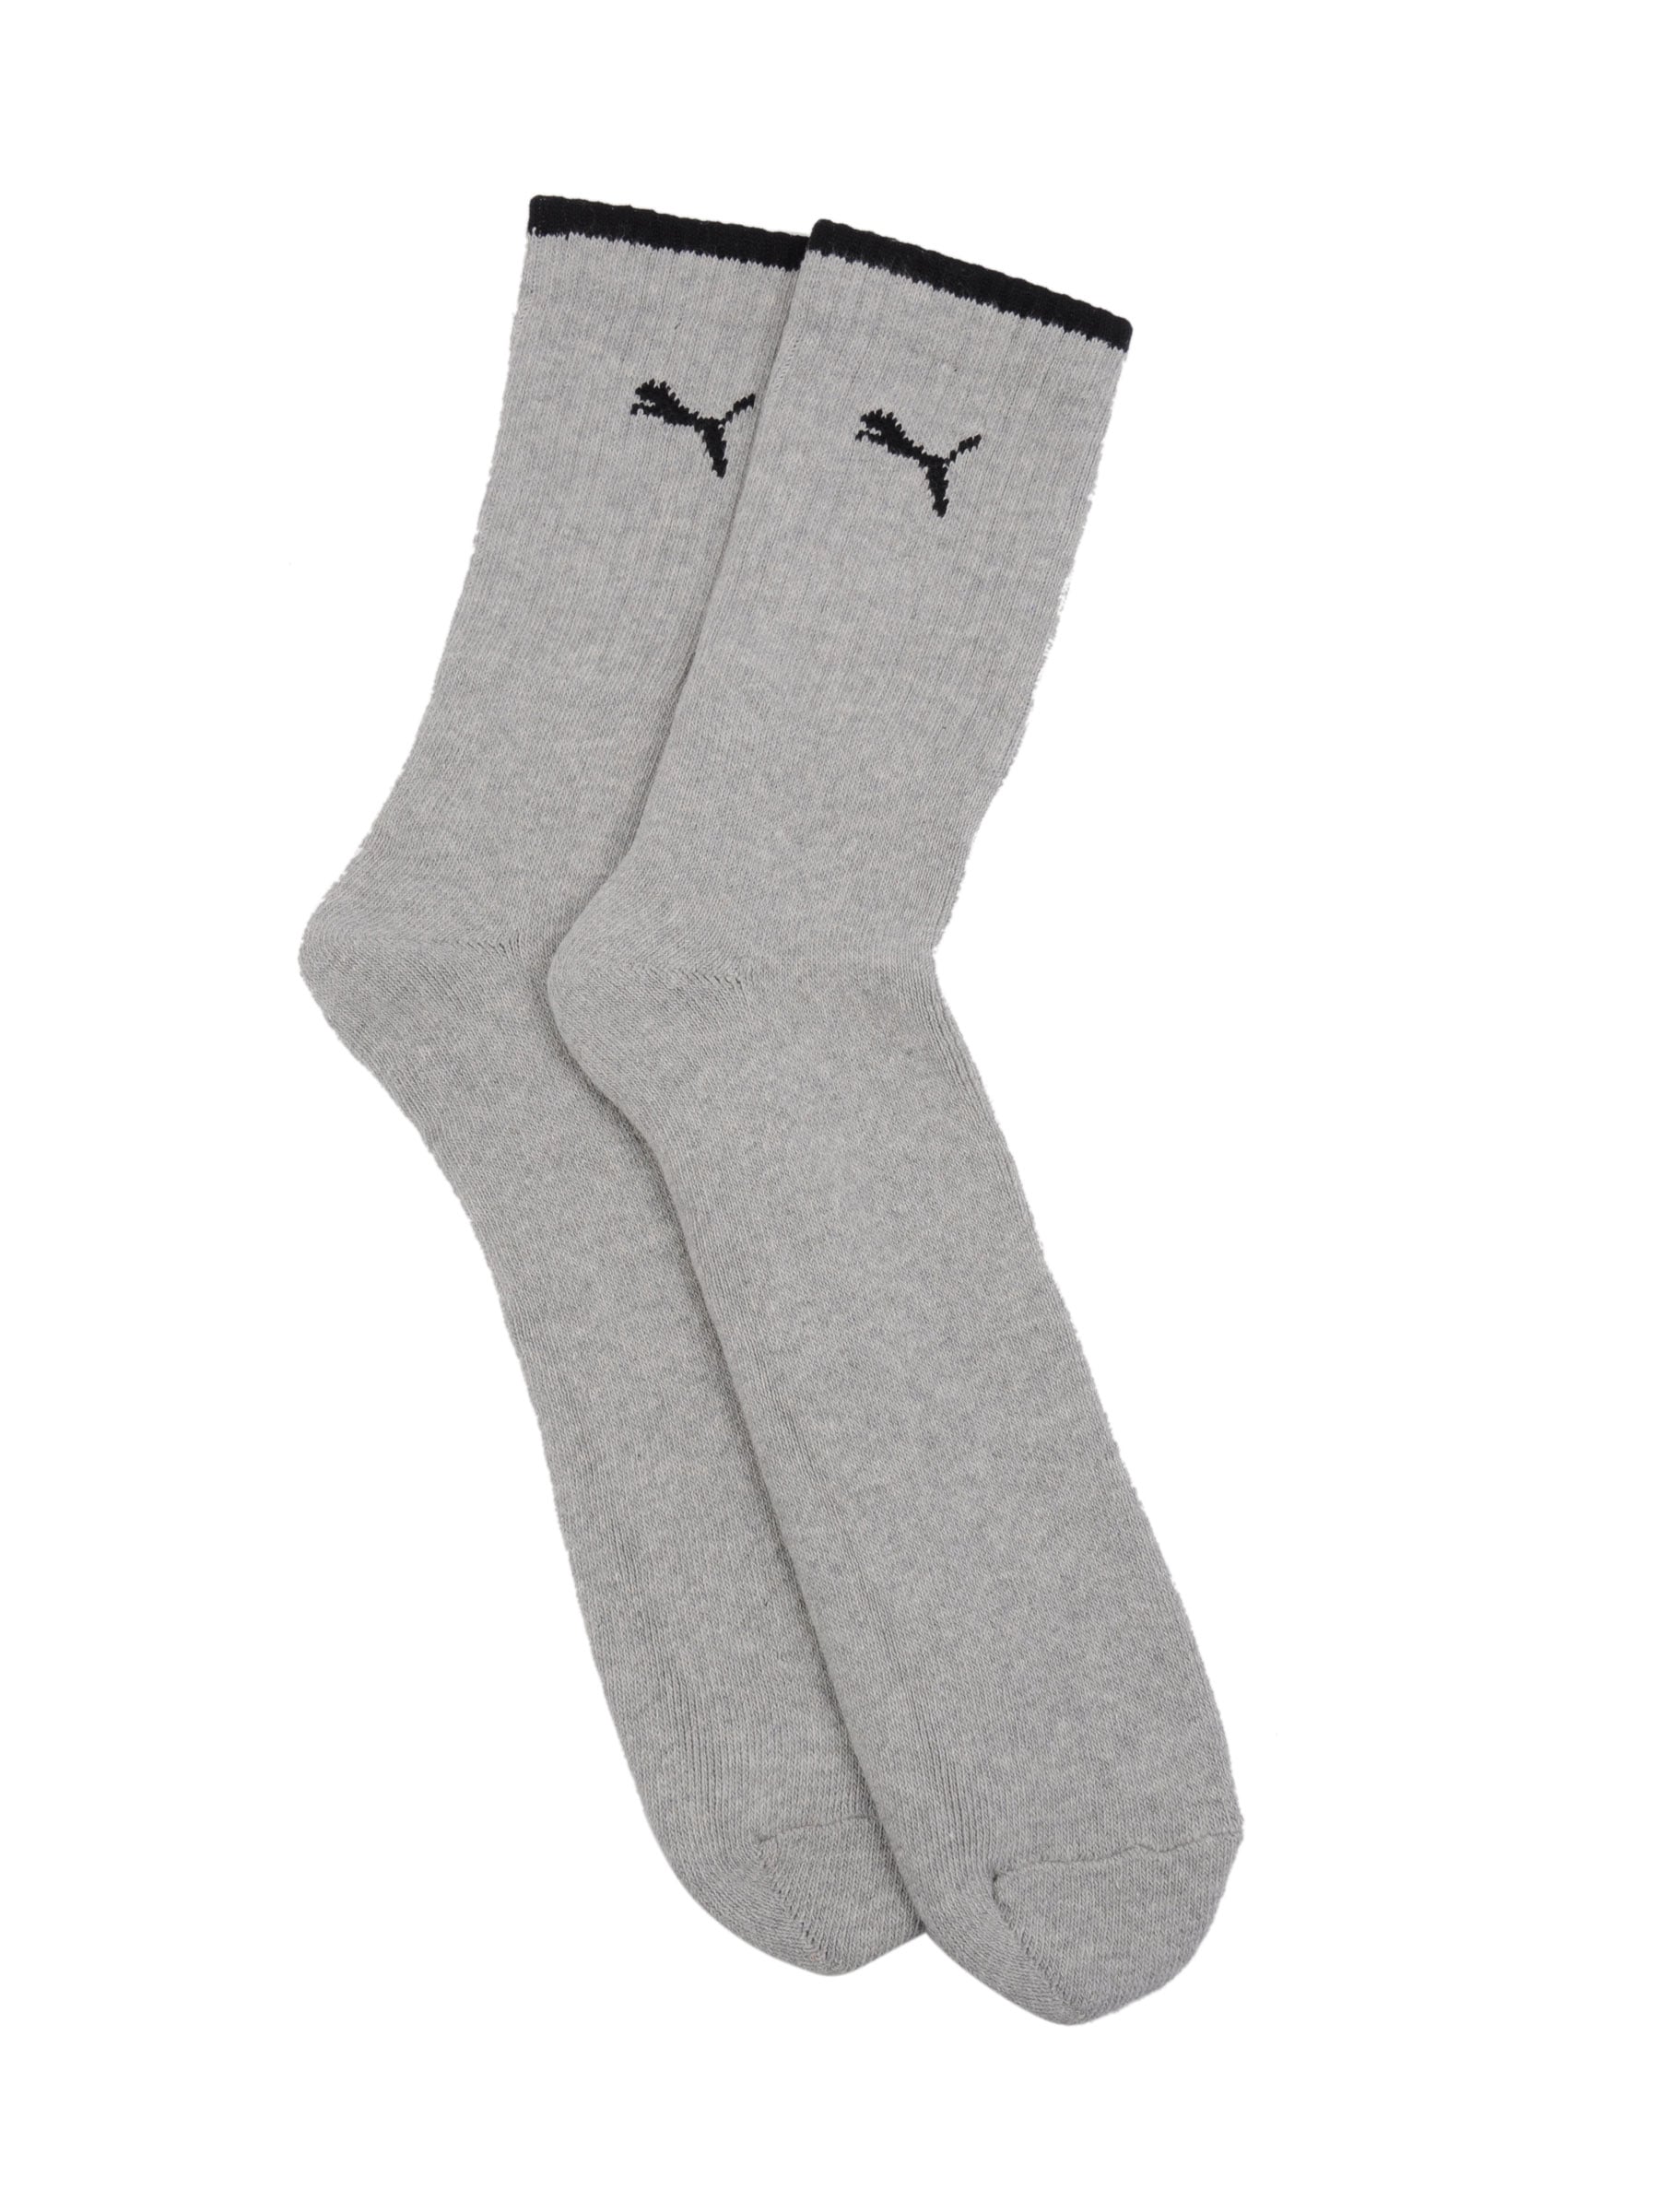 Puma Men Sports Socks 1 Pair Grey Socks